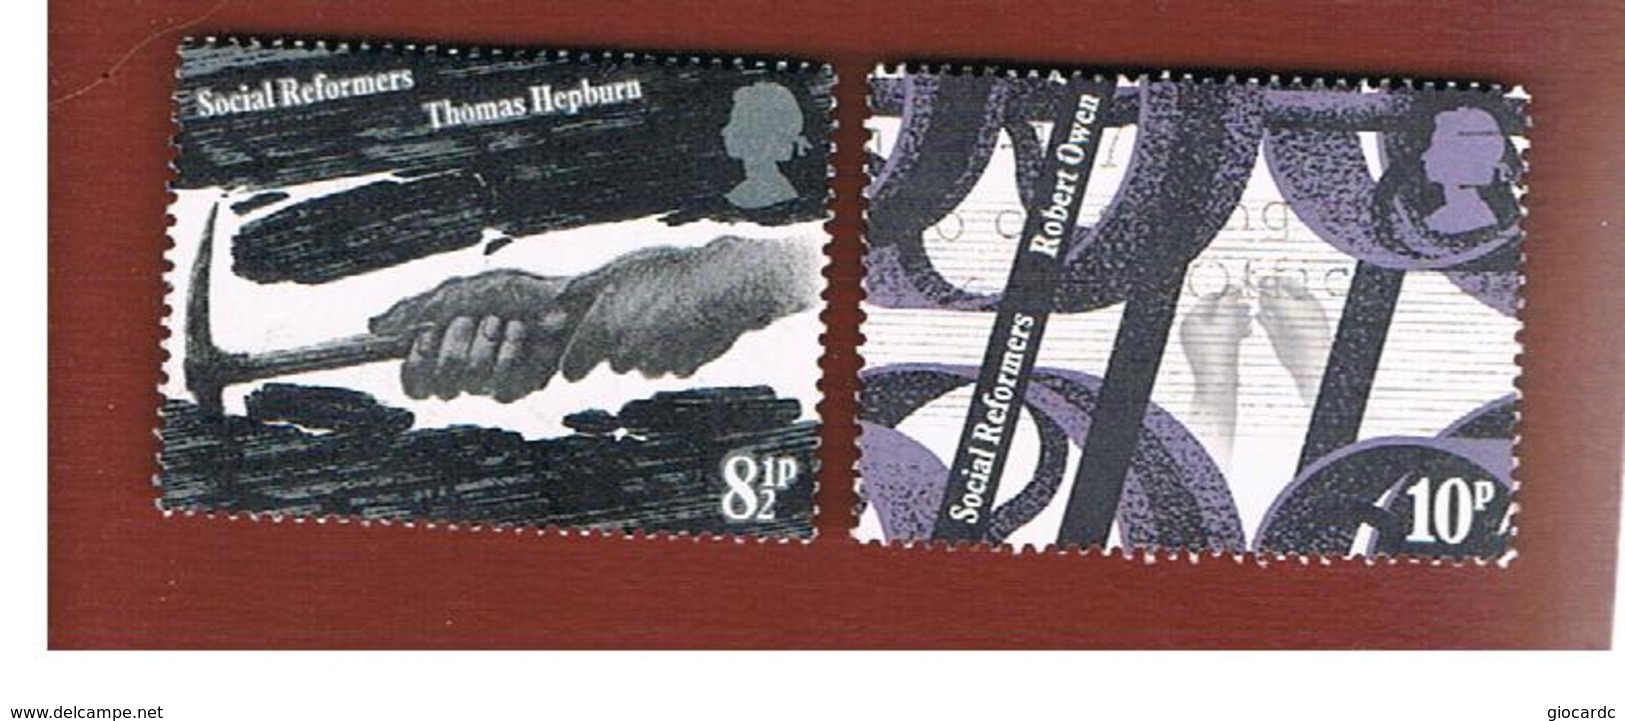 GRAN BRETAGNA (UNITED KINGDOM) -  SG 1001.1002  -  1976  SOCIAL REFORMS   - USED° - Used Stamps